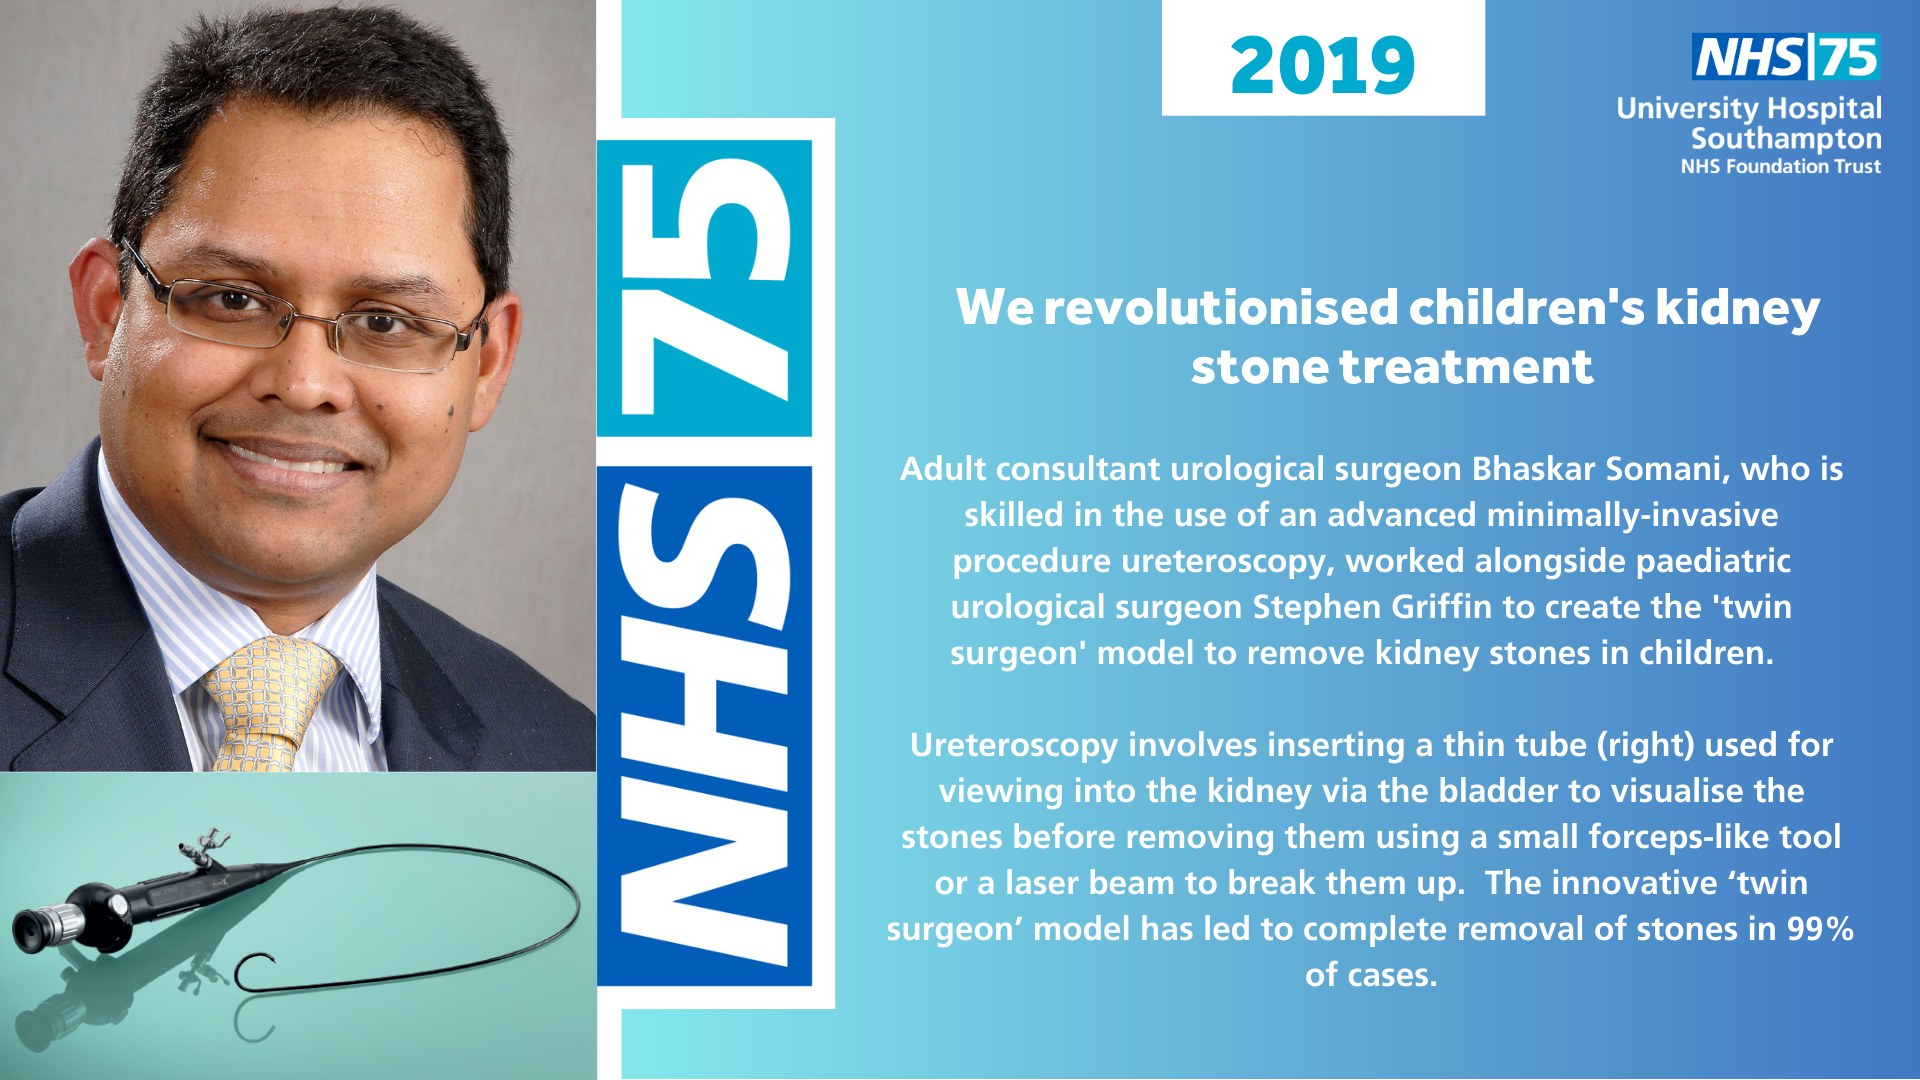 We revolutionised children's kidney stone treatment